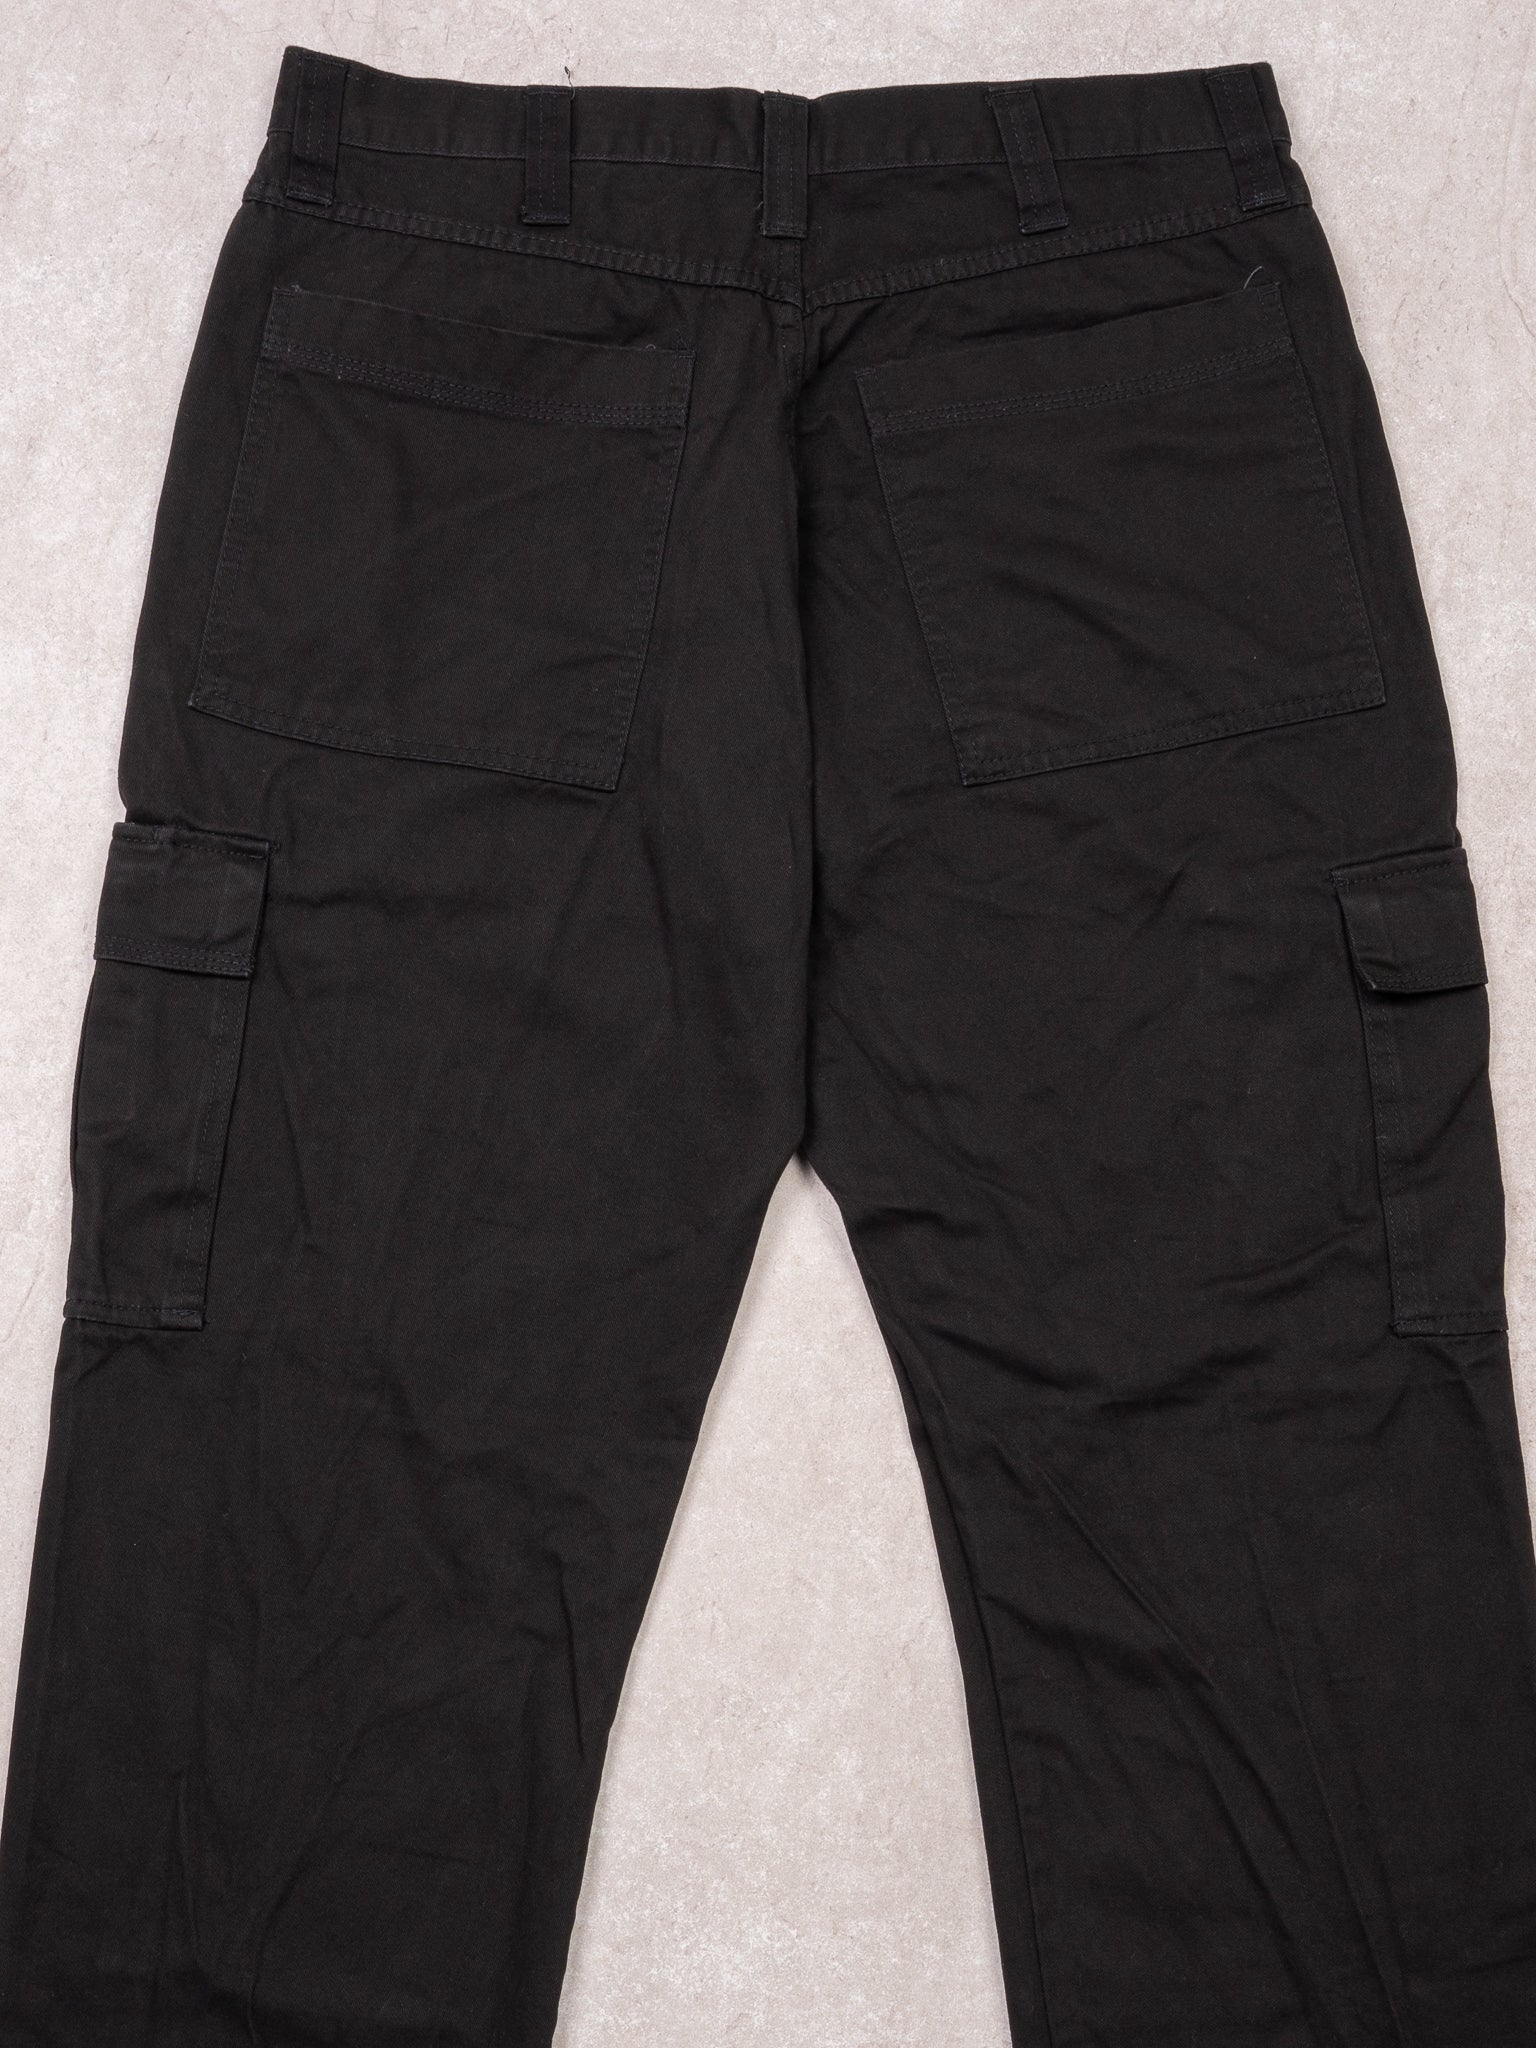 Vintage Black Wrangler Cargo Pants 2.0 (34 x 30)